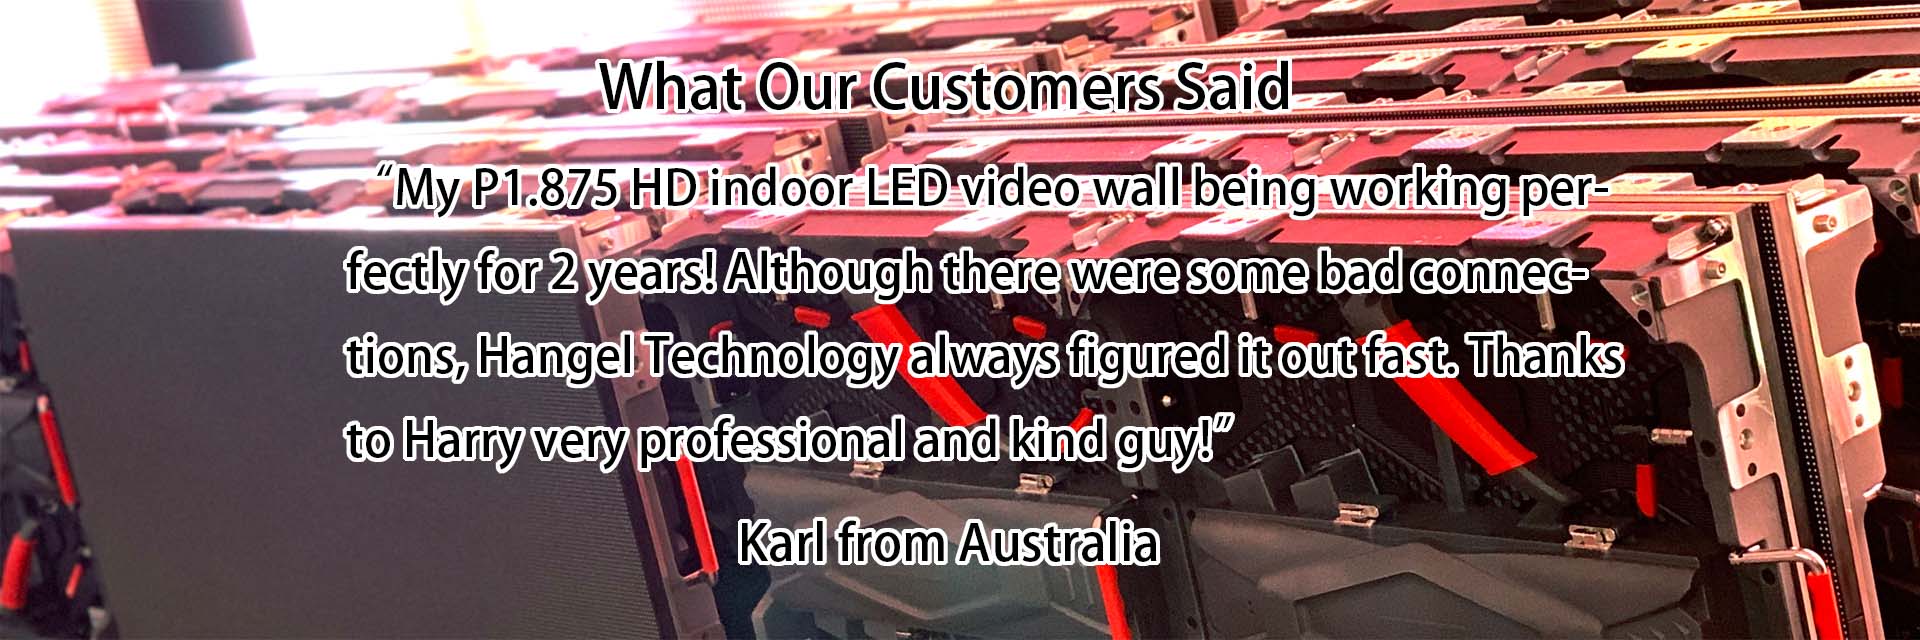 Hangel LED display screen customer comment